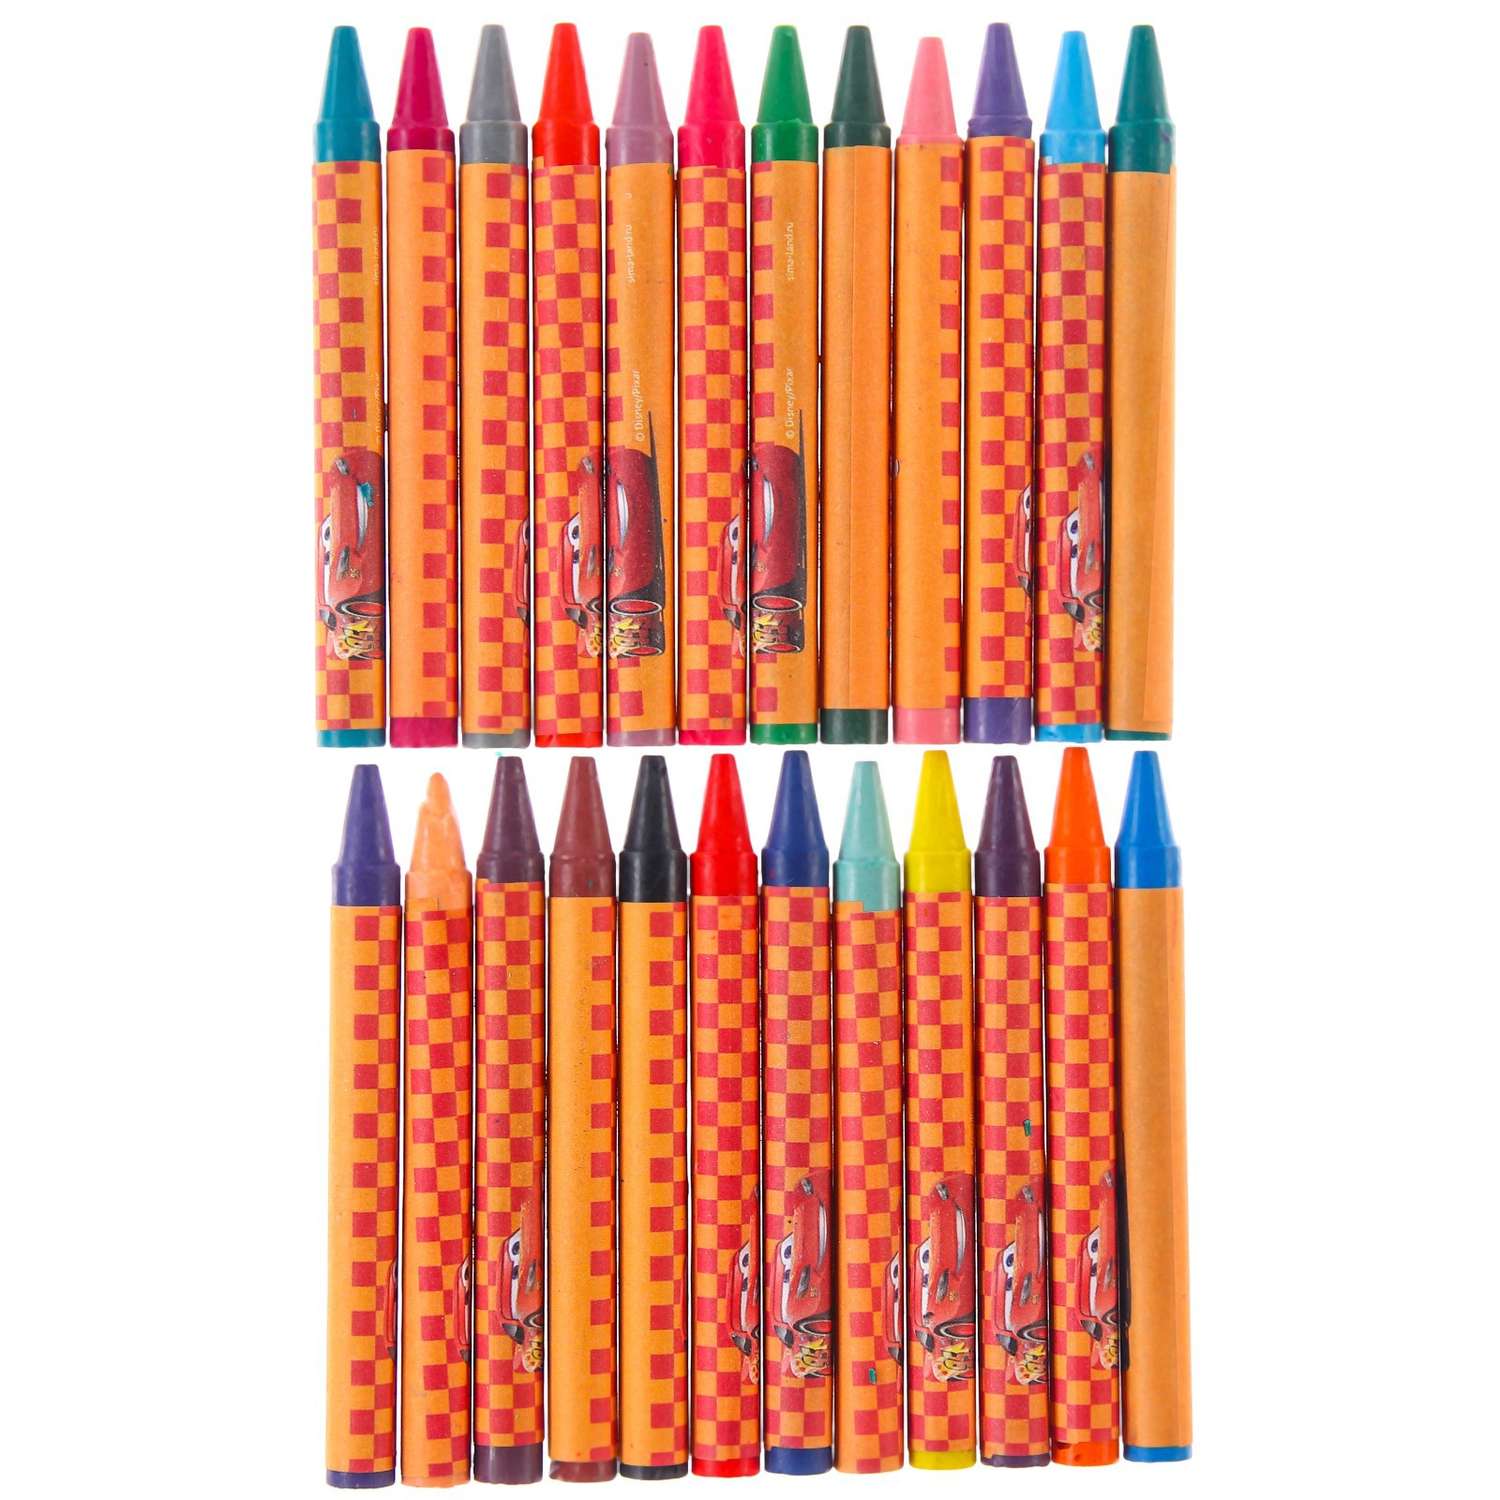 Восковые Disney карандаши набор 24 цвета Тачки - фото 2